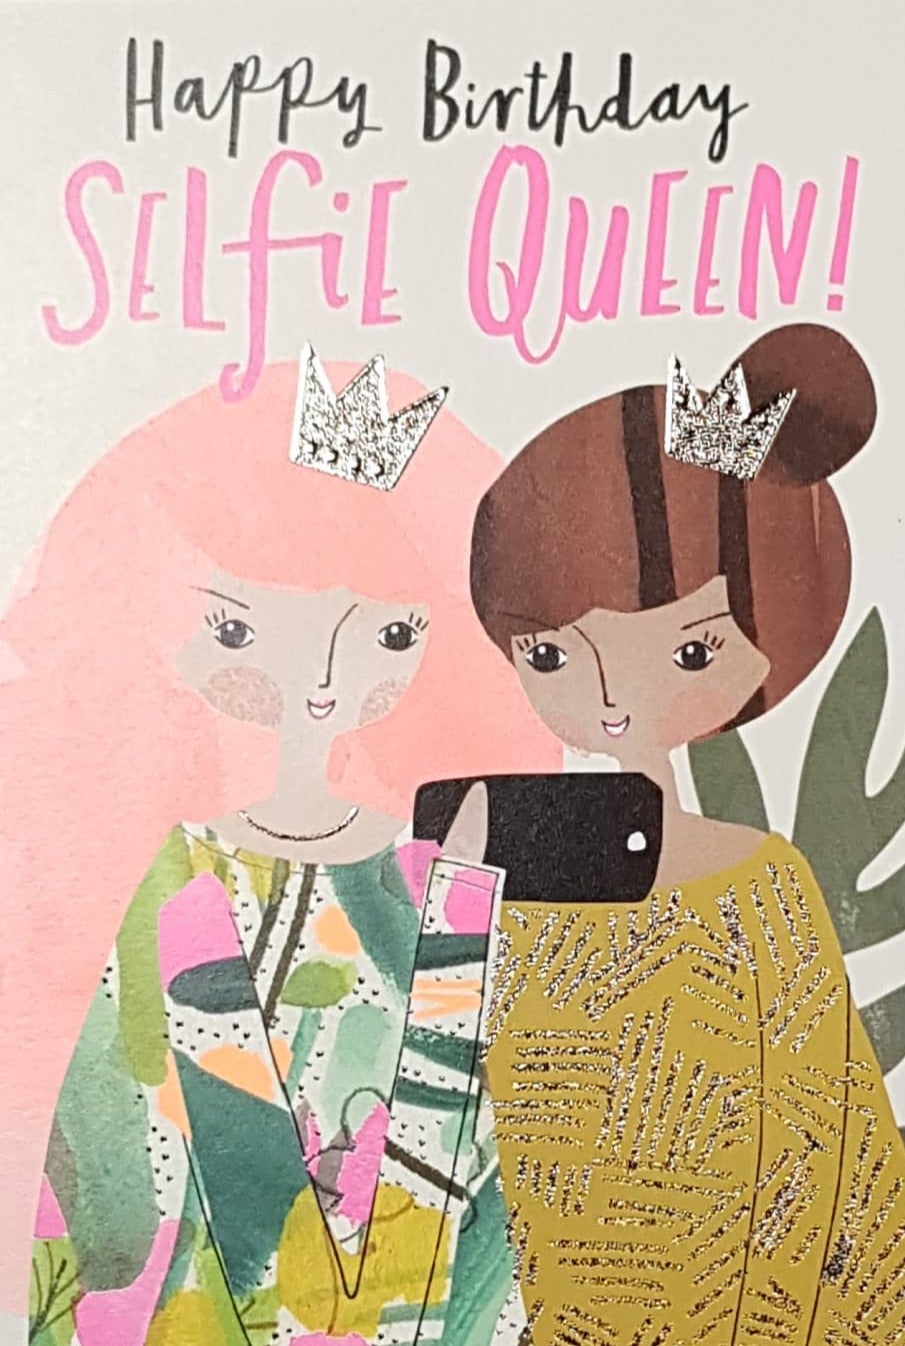 Birthday Card - Female / Selfie Queen, Two Women Taking Selfie Wearing Crowns